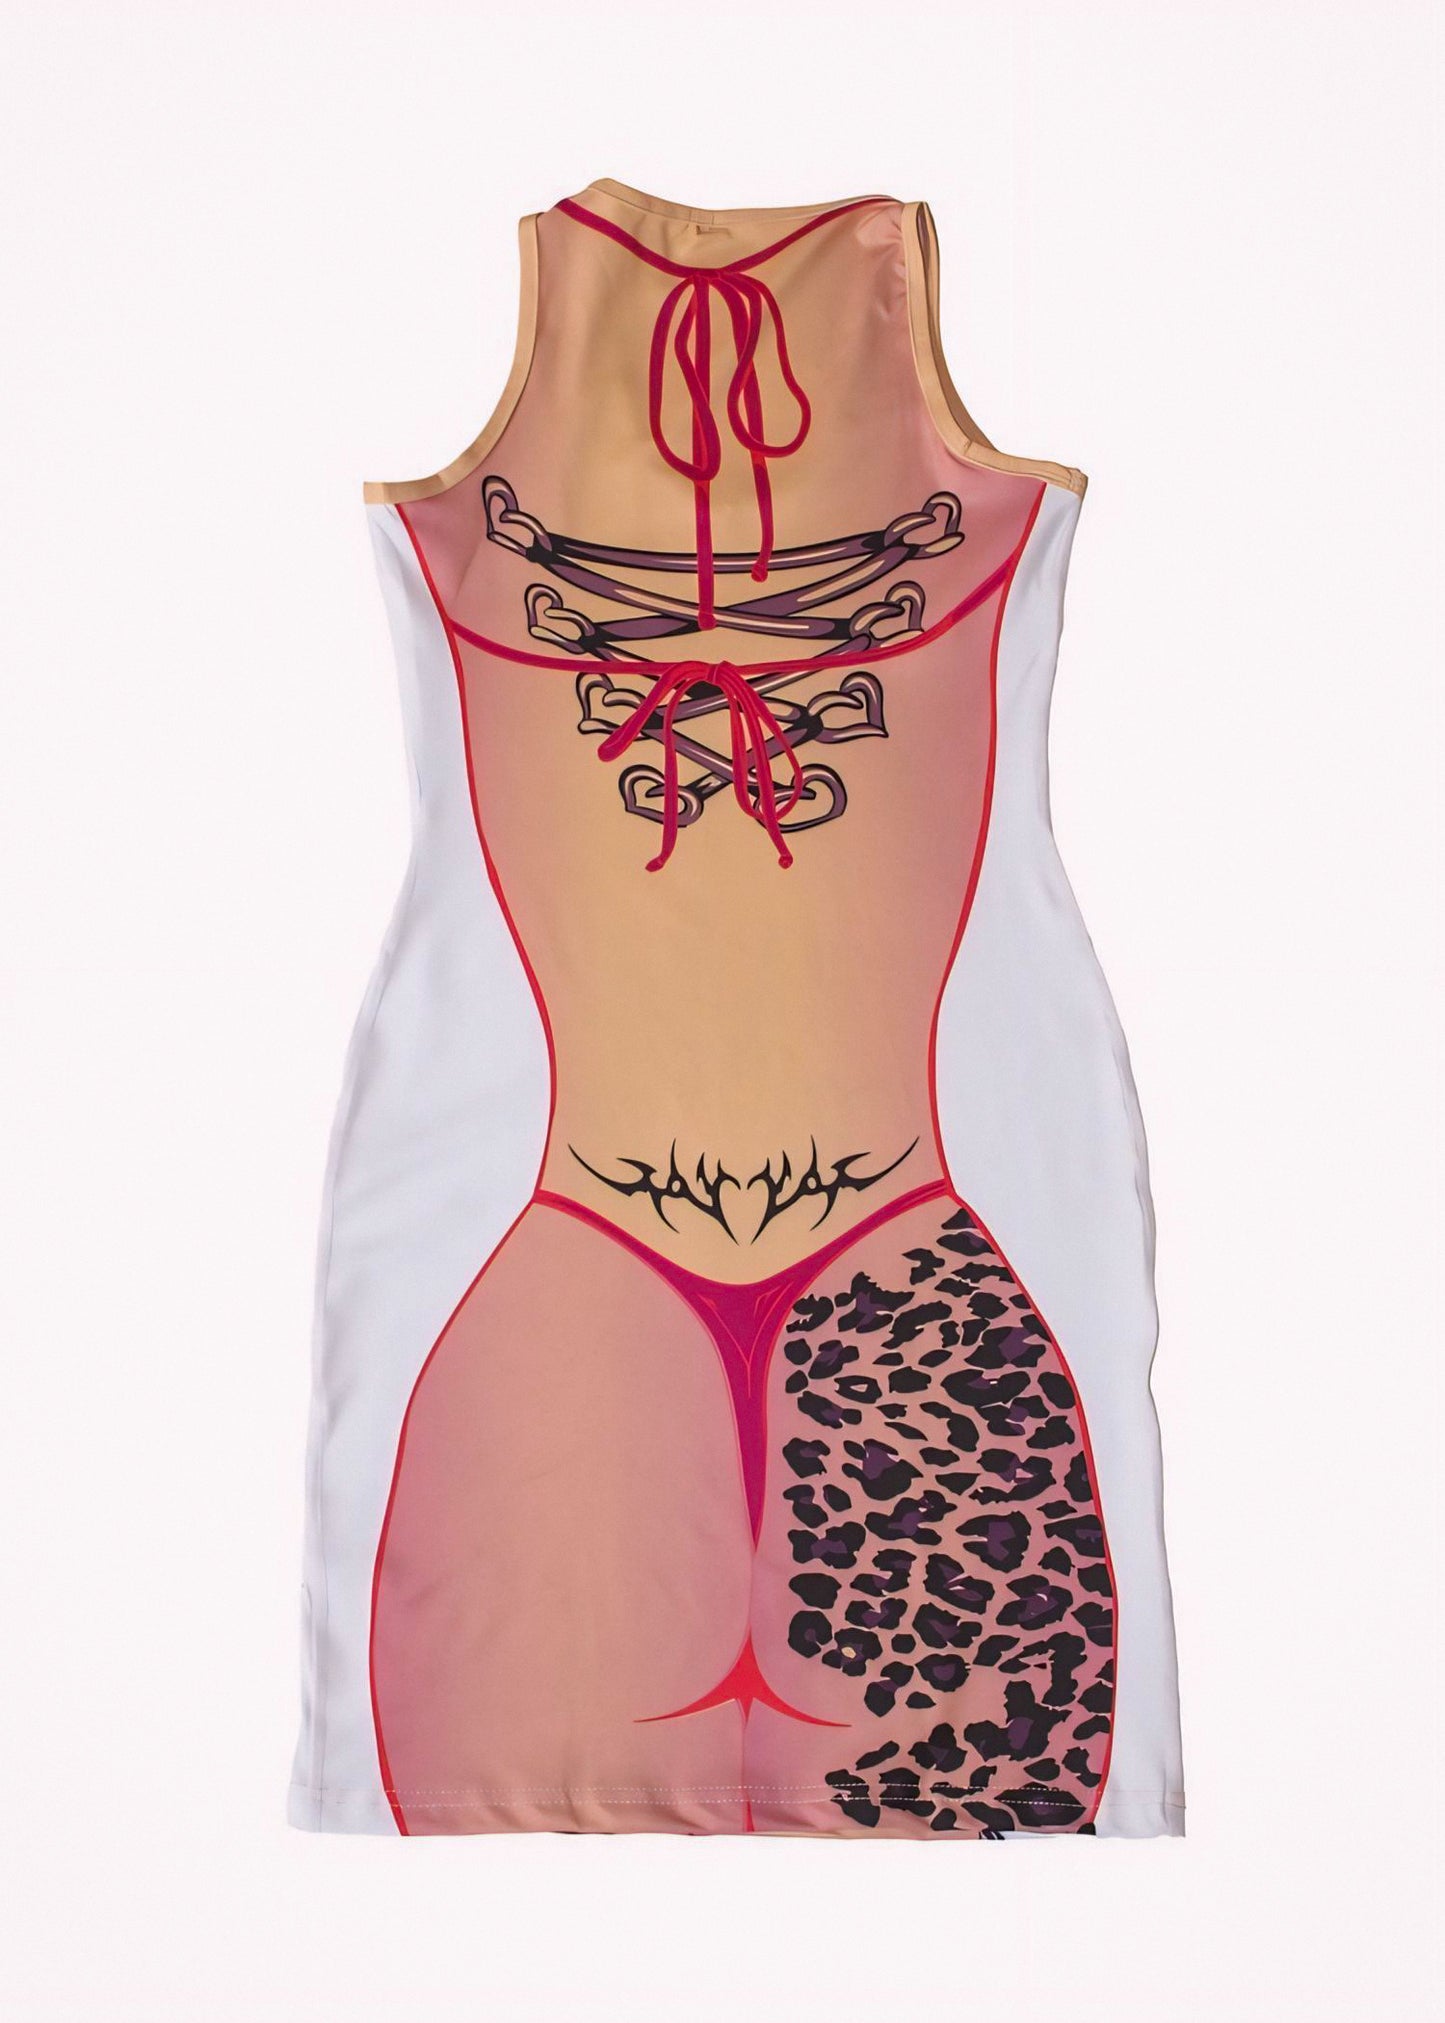 Grieve Miami Tattoo Dress *Lighter Version